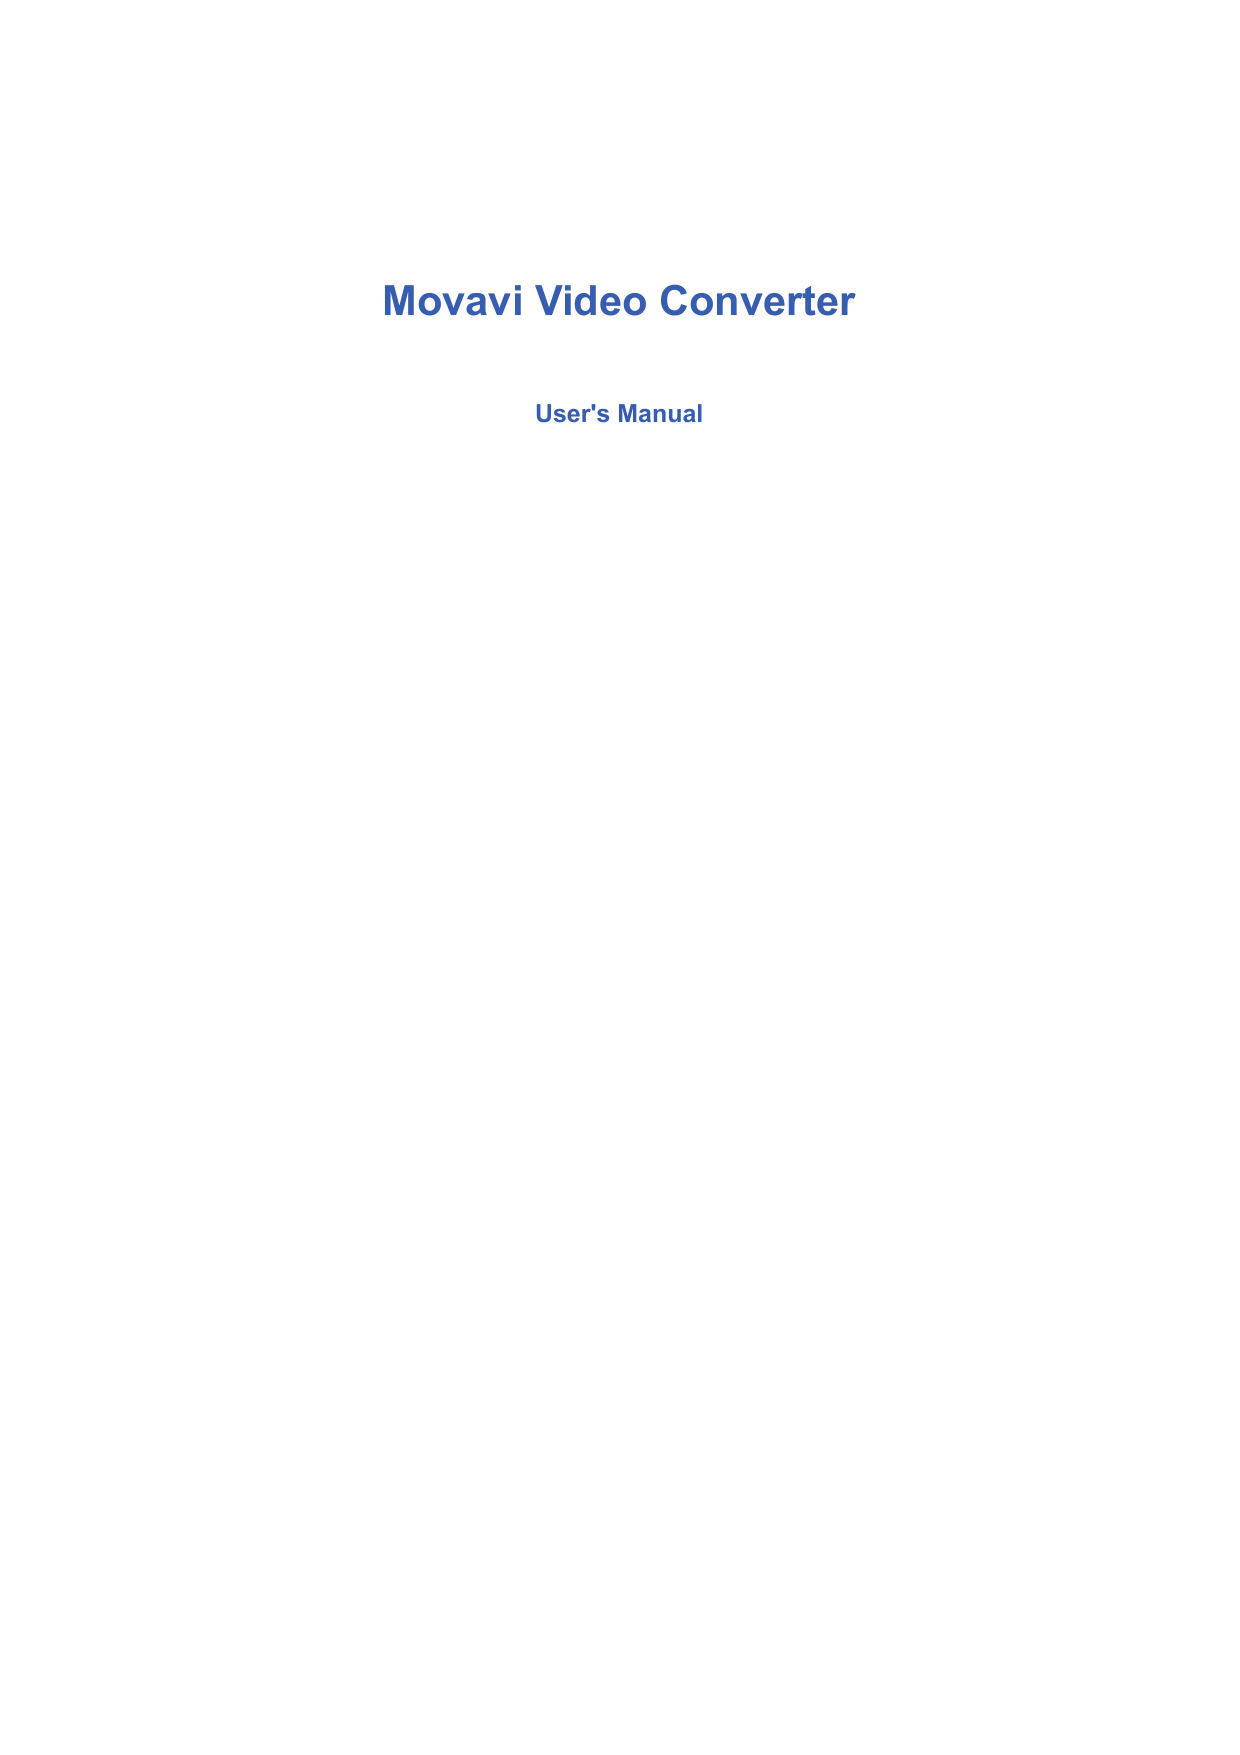 media magic video converter mjpeg